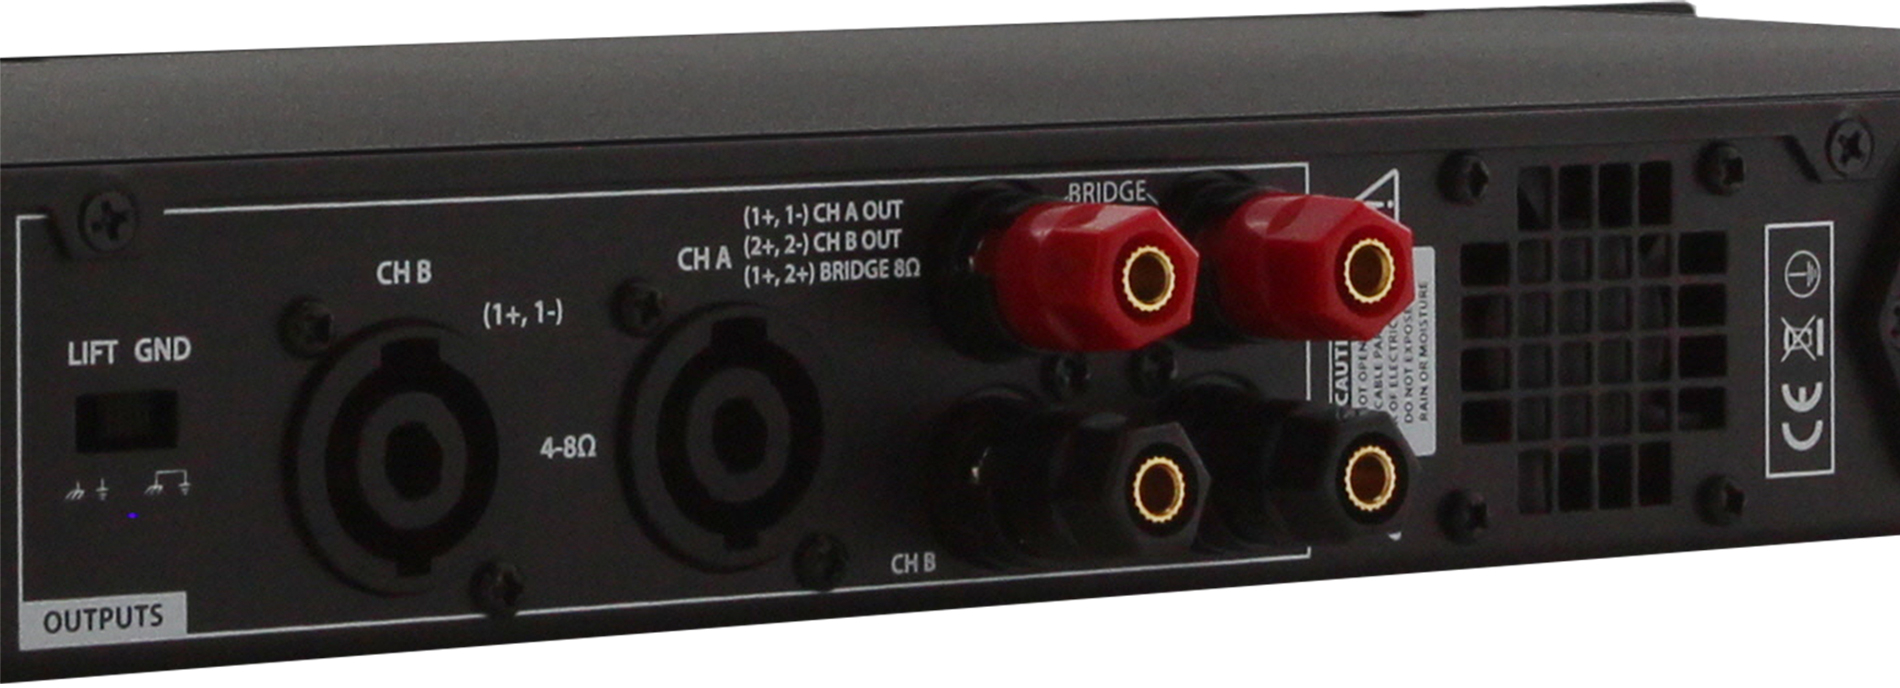 Definitive Audio Ma 1u 2300d - POWER AMPLIFIER STEREO - Variation 1